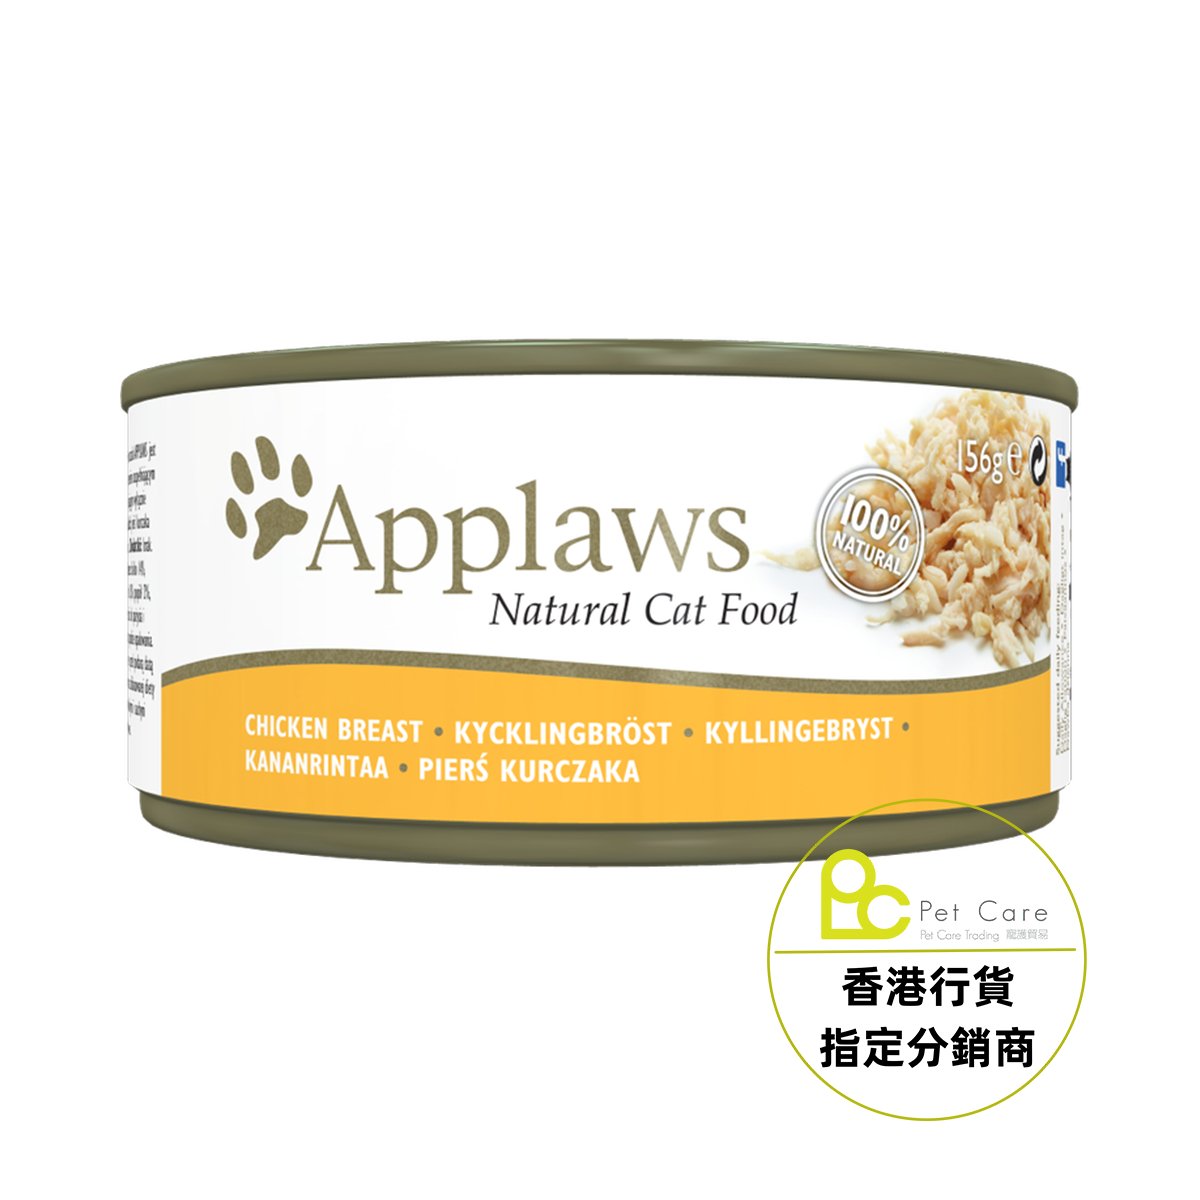 Applaws 全天然 156g 貓罐頭 - 雞胸 (大) - 幸福站